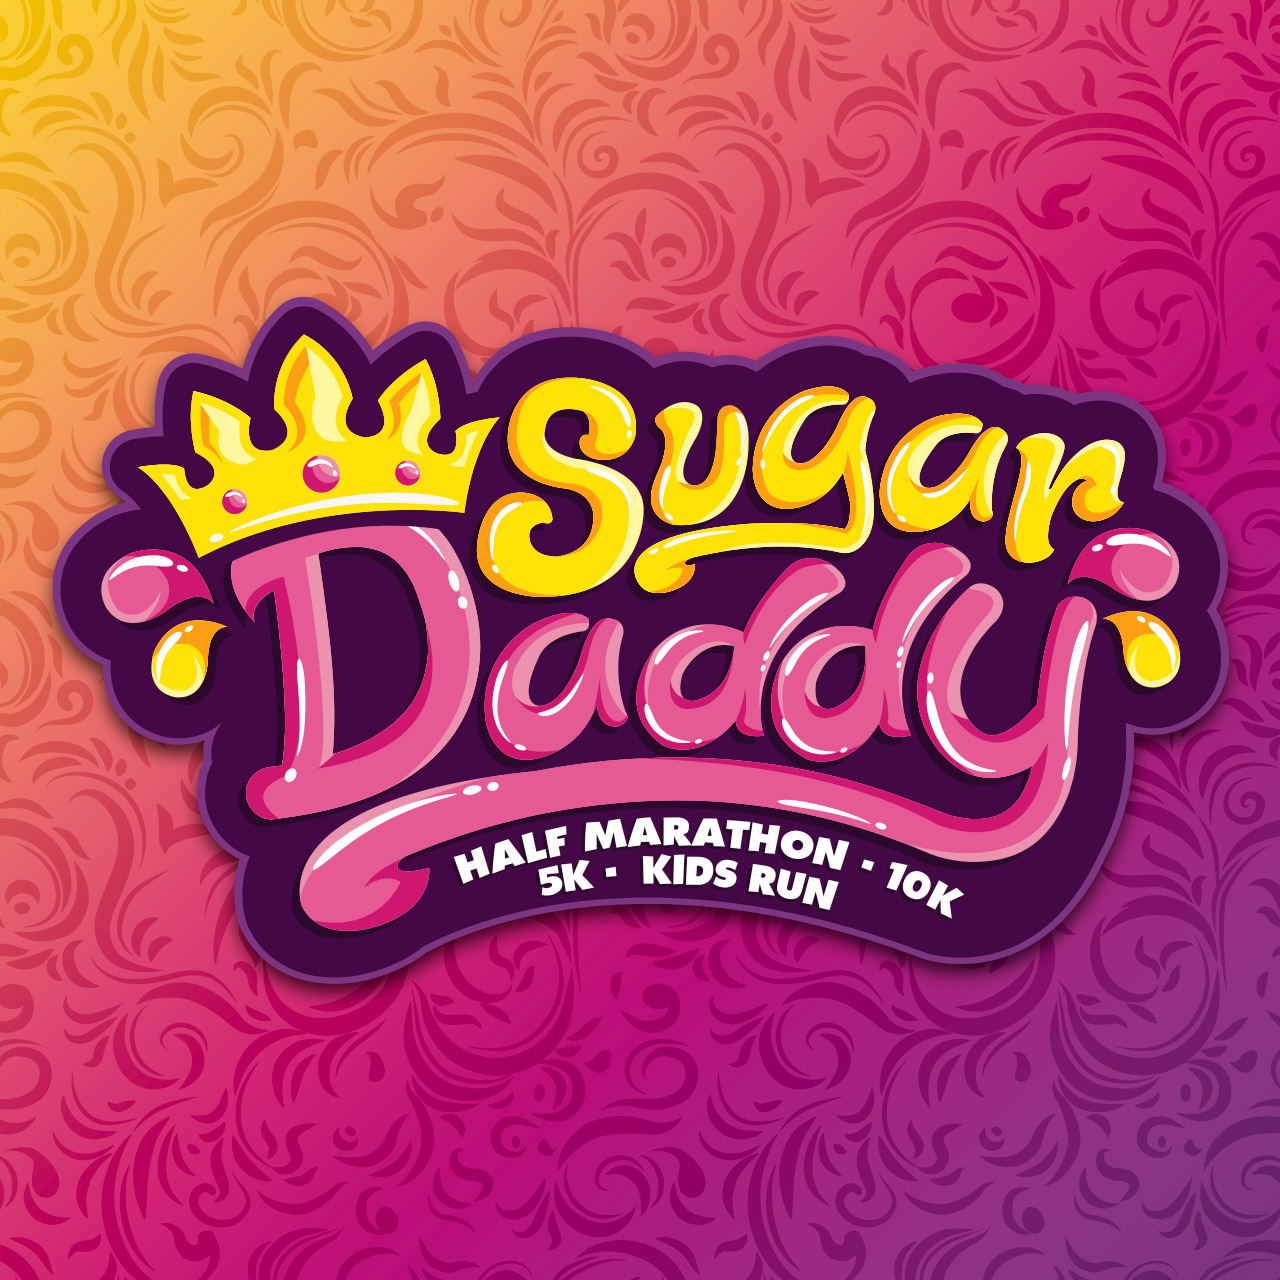 Sugar Daddy Half Marathon, 10K & 5K logo on RaceRaves